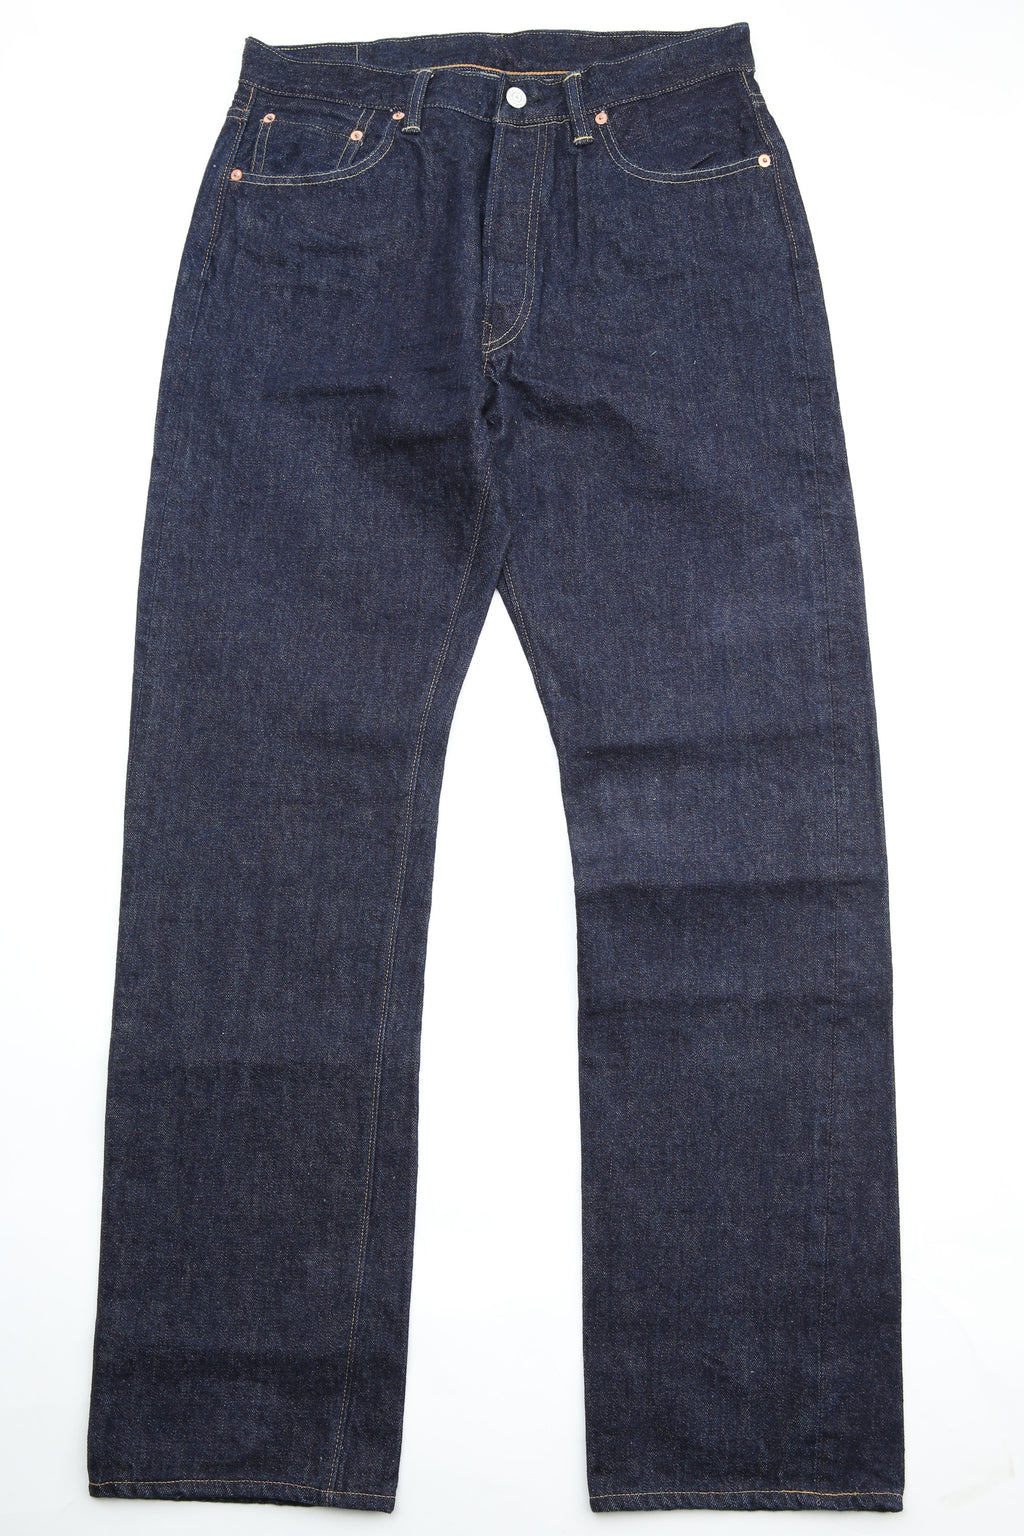 Warehouse & Co. Lot 800xx 14.5OZ Standard Straight Fit Jeans - Indigo  Denim/One Wash